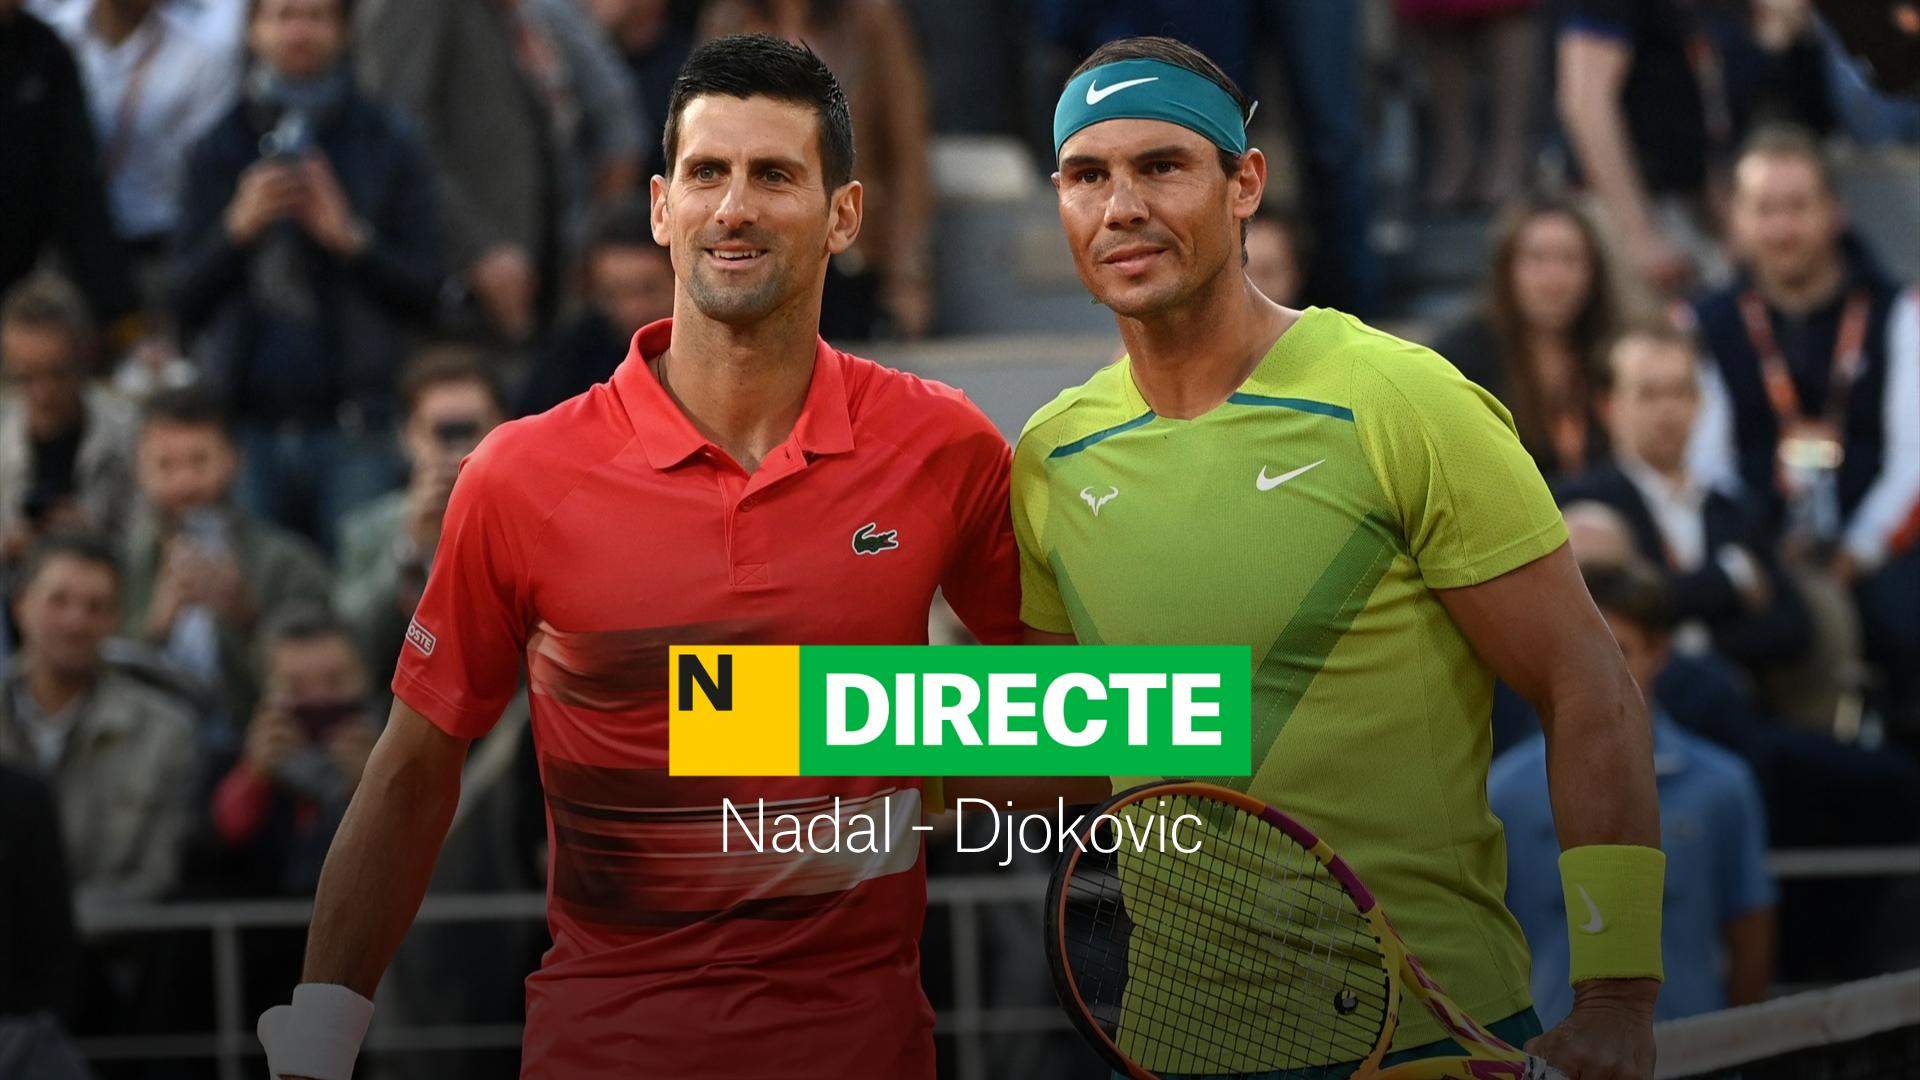 Nadal - Djokovic als Jocs Olímpics 2024, DIRECTE |Triomf del serbi